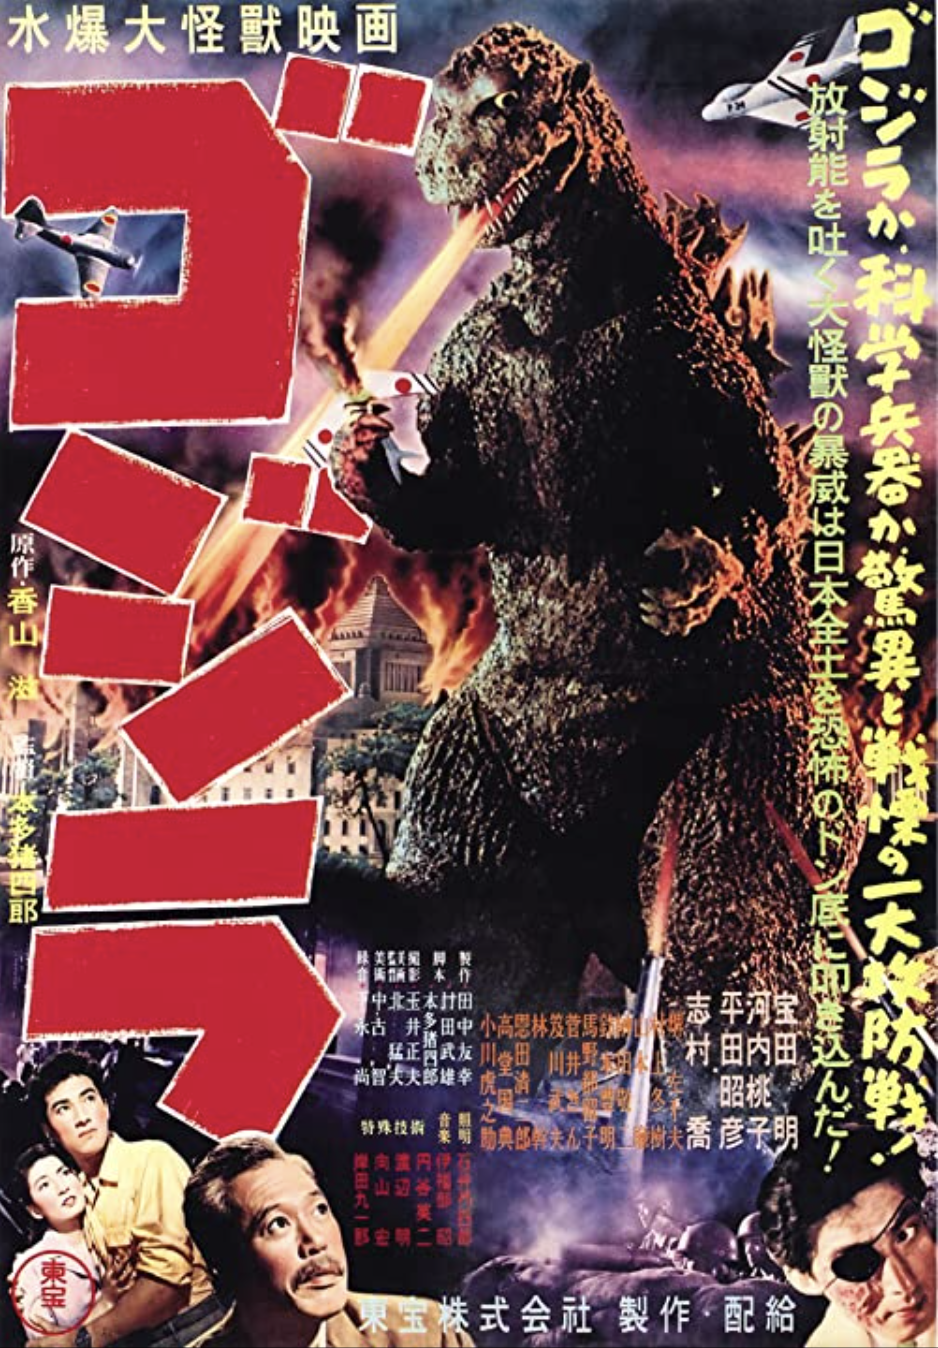 Poster for Godzilla, 1954.